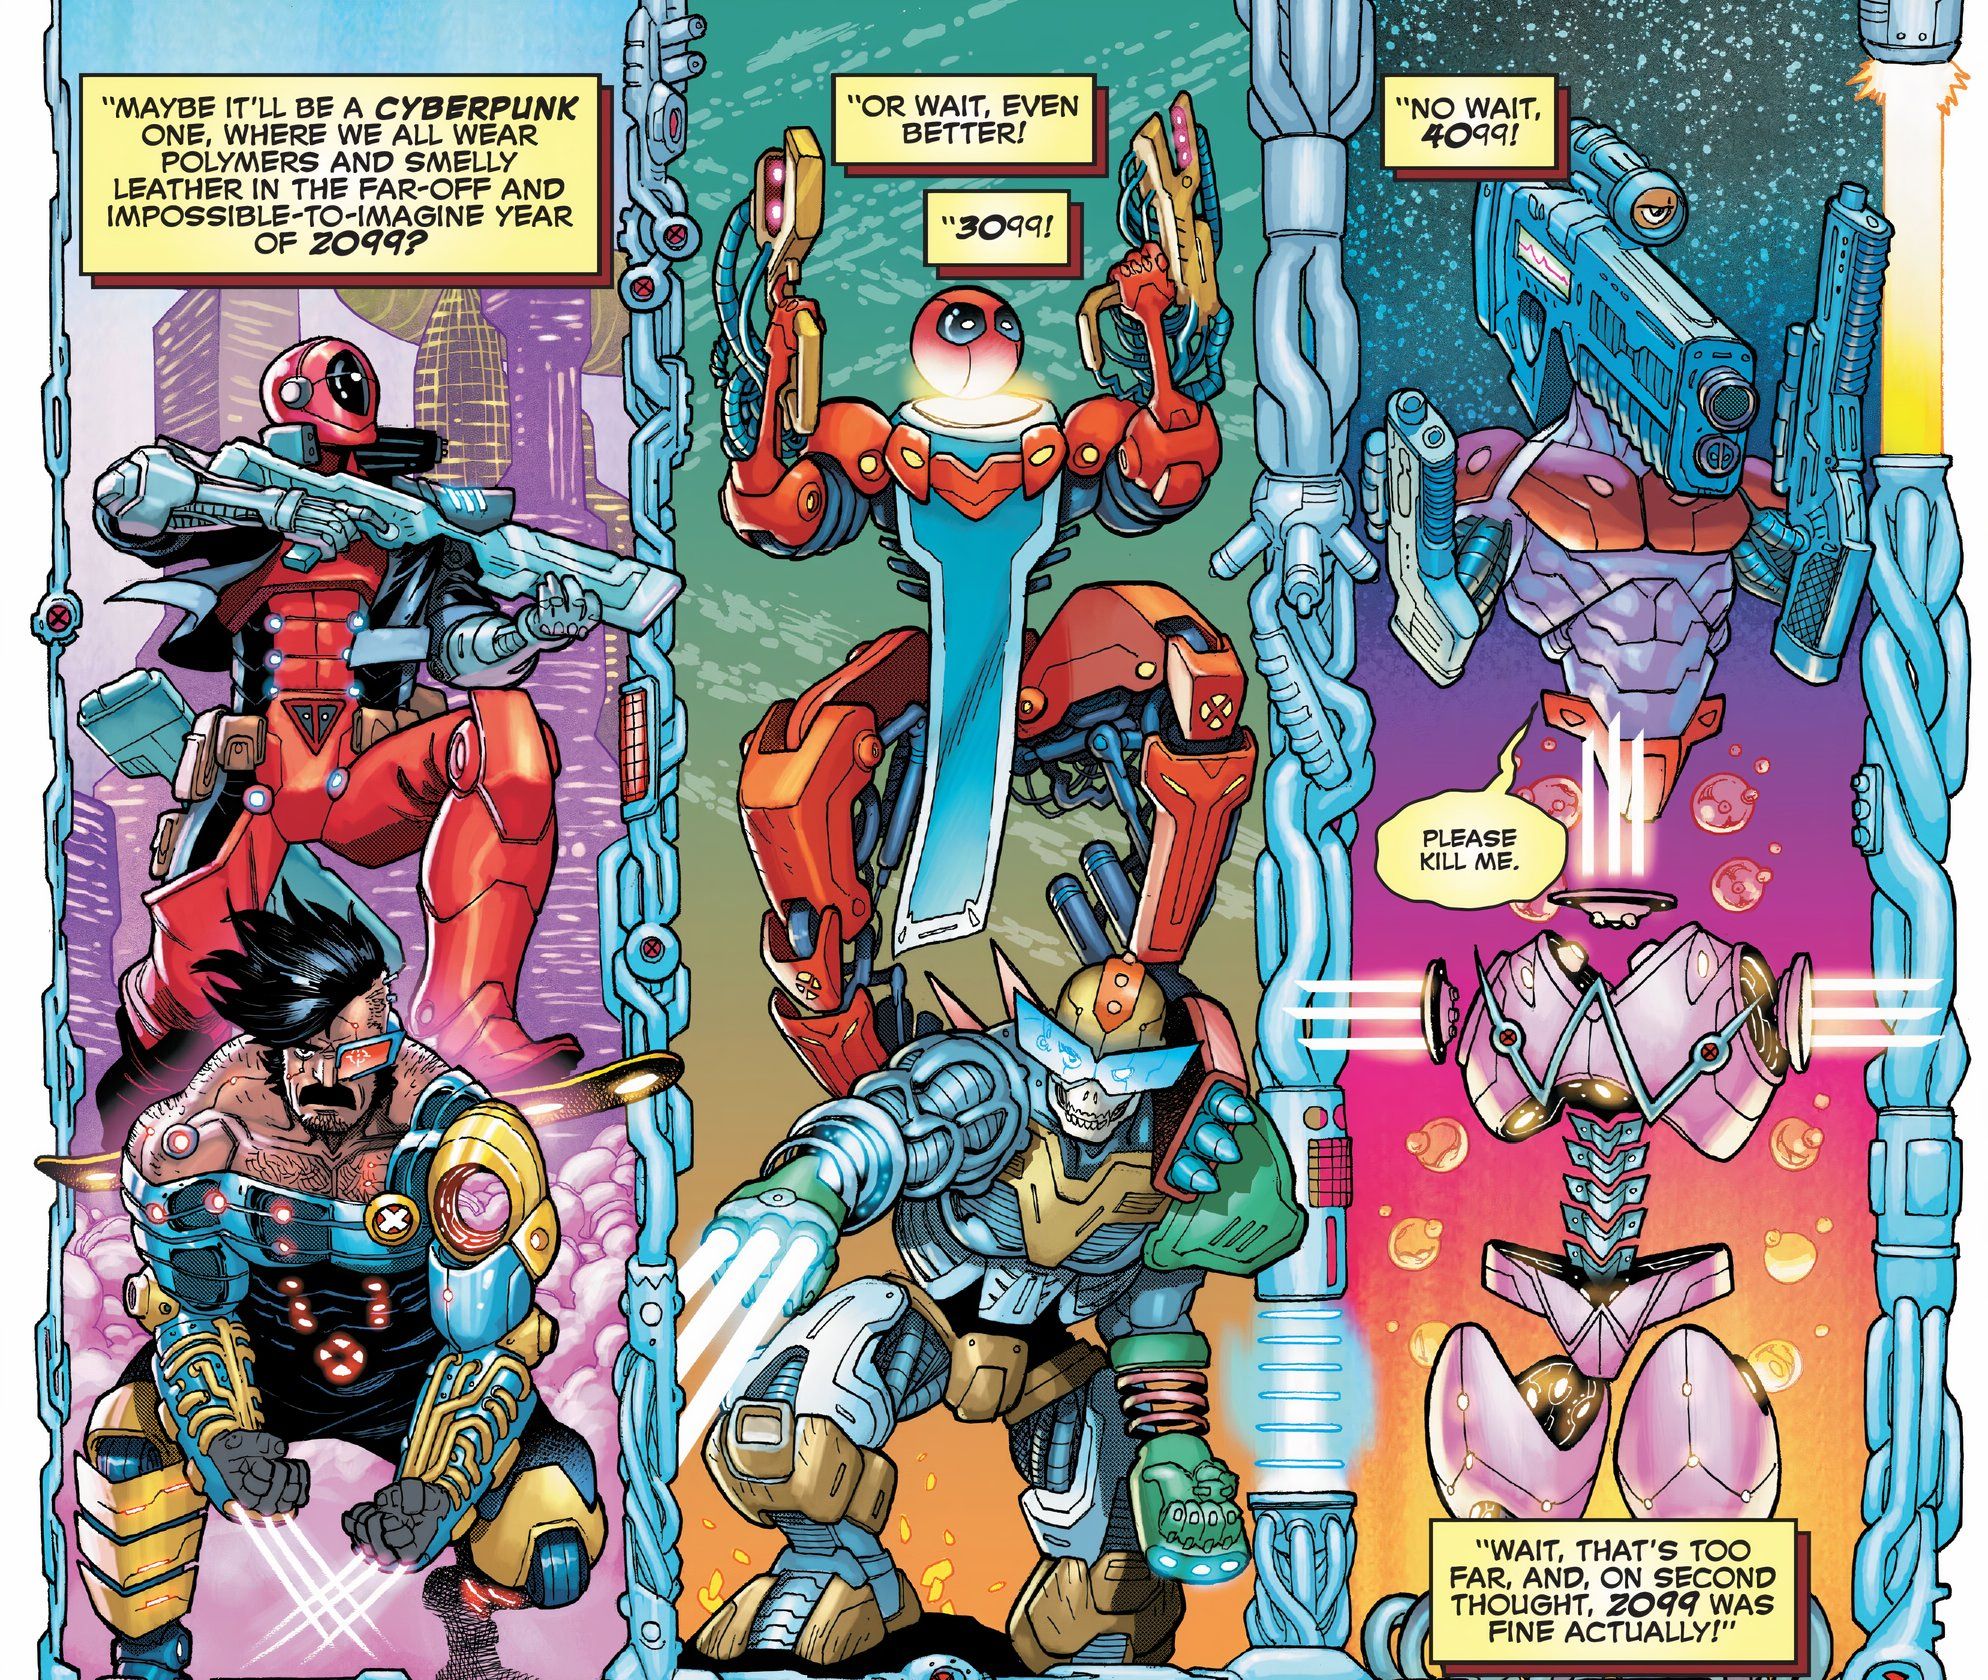 Arma X-Traction Parte Dois Variantes futuras de Wolverine e Deadpool até 2099,3099 e 4099